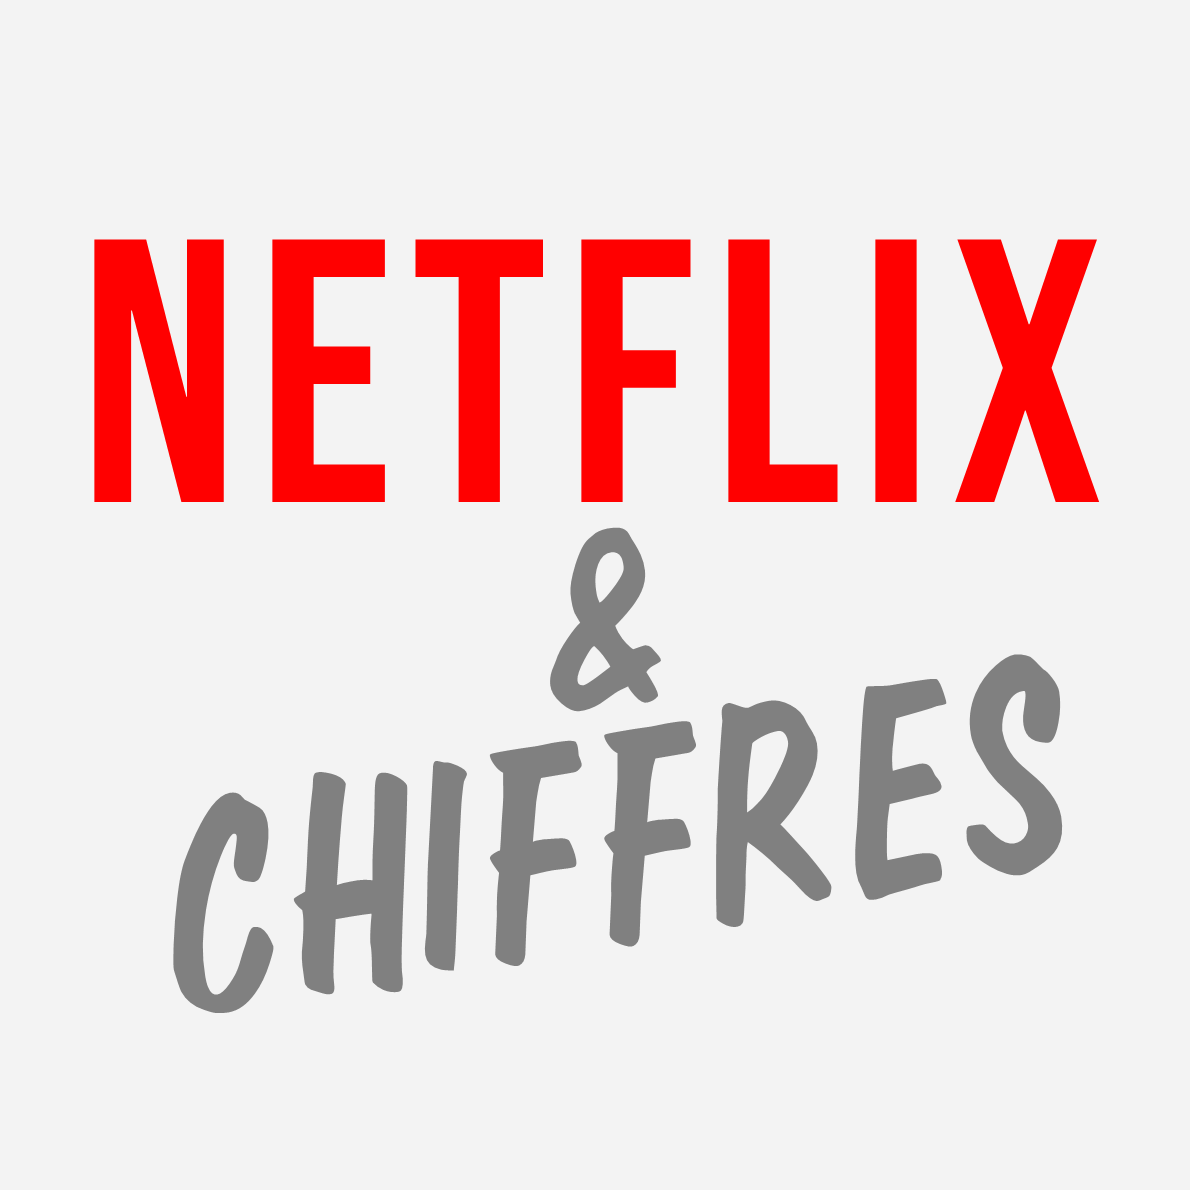 Artwork for Netflix & Chiffres